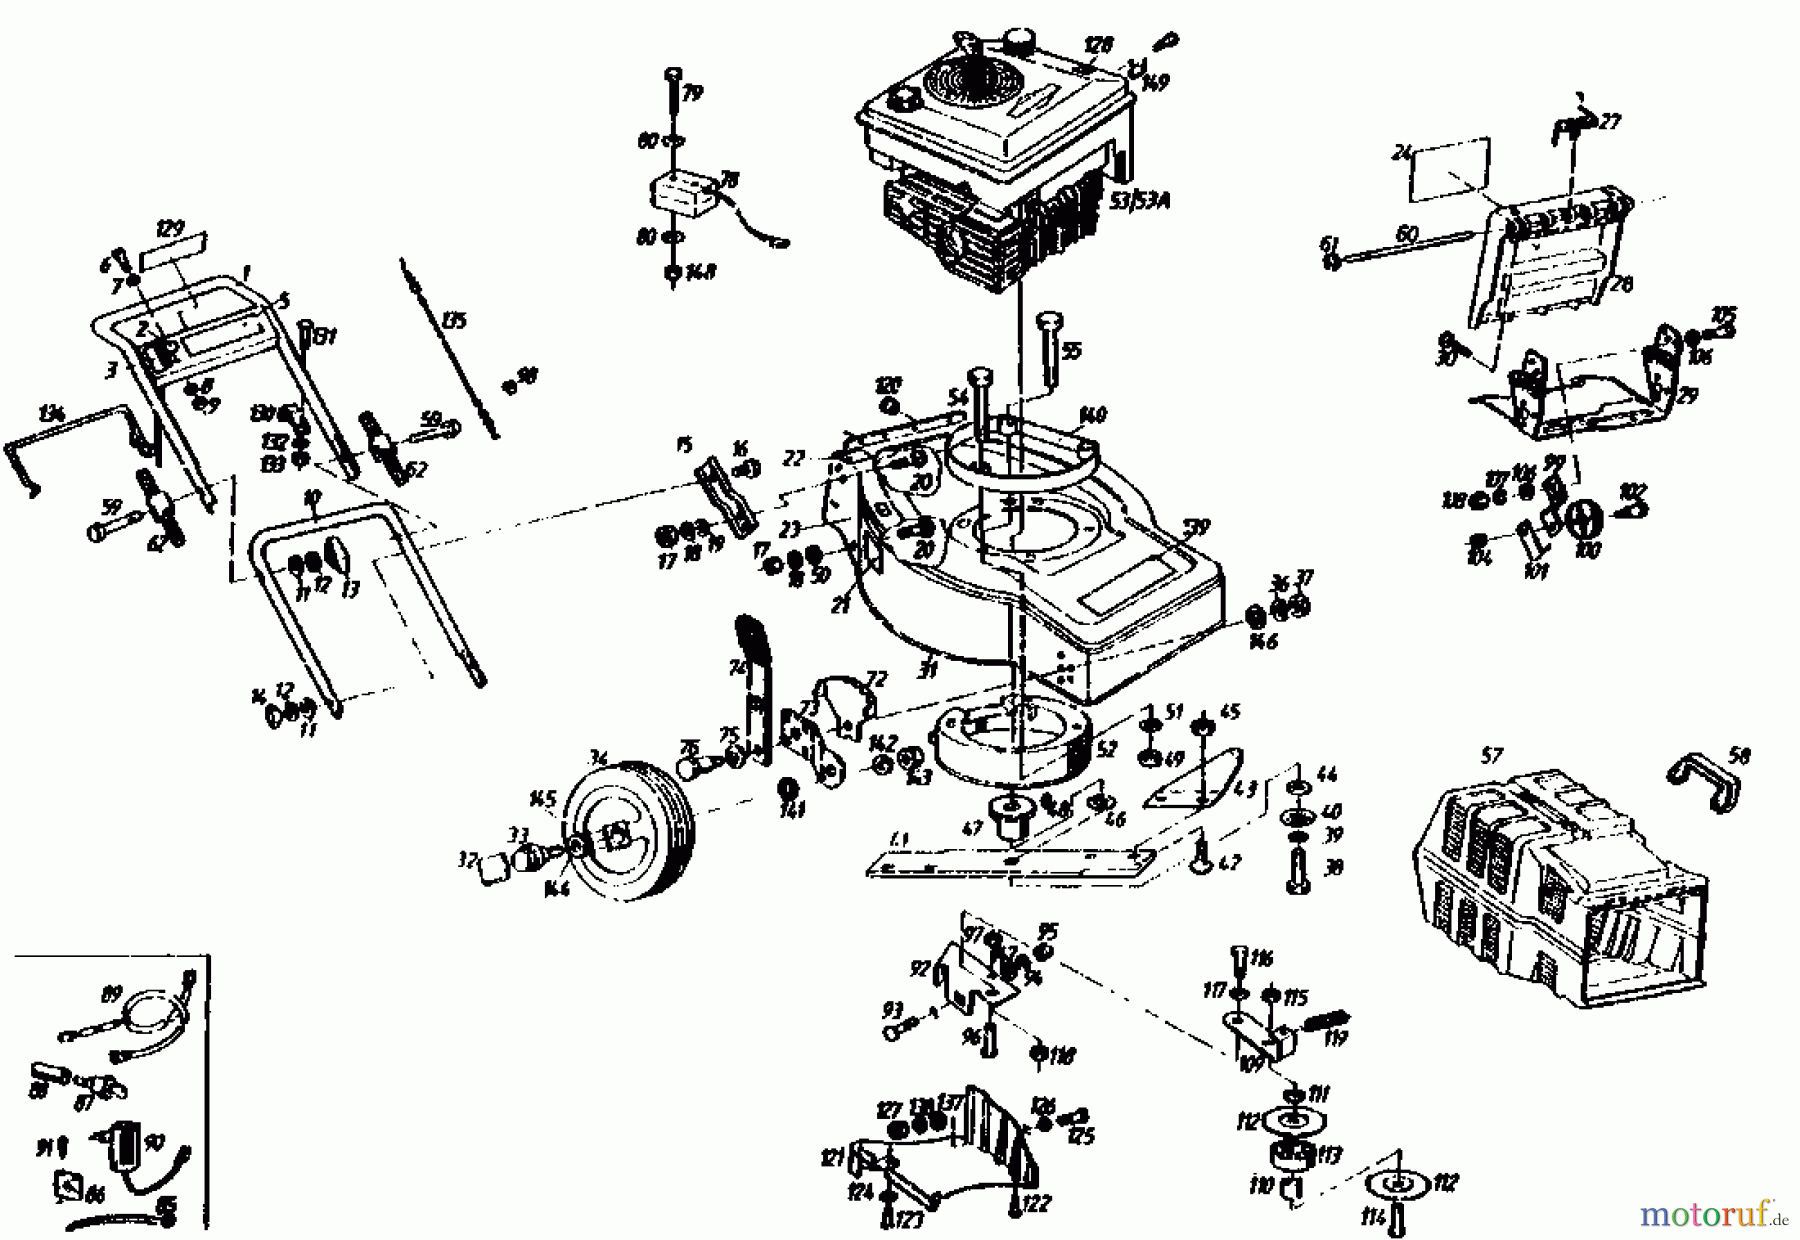  Gutbrod Petrol mower self propelled TURBO HBSRE 04011.04  (1991) Basic machine